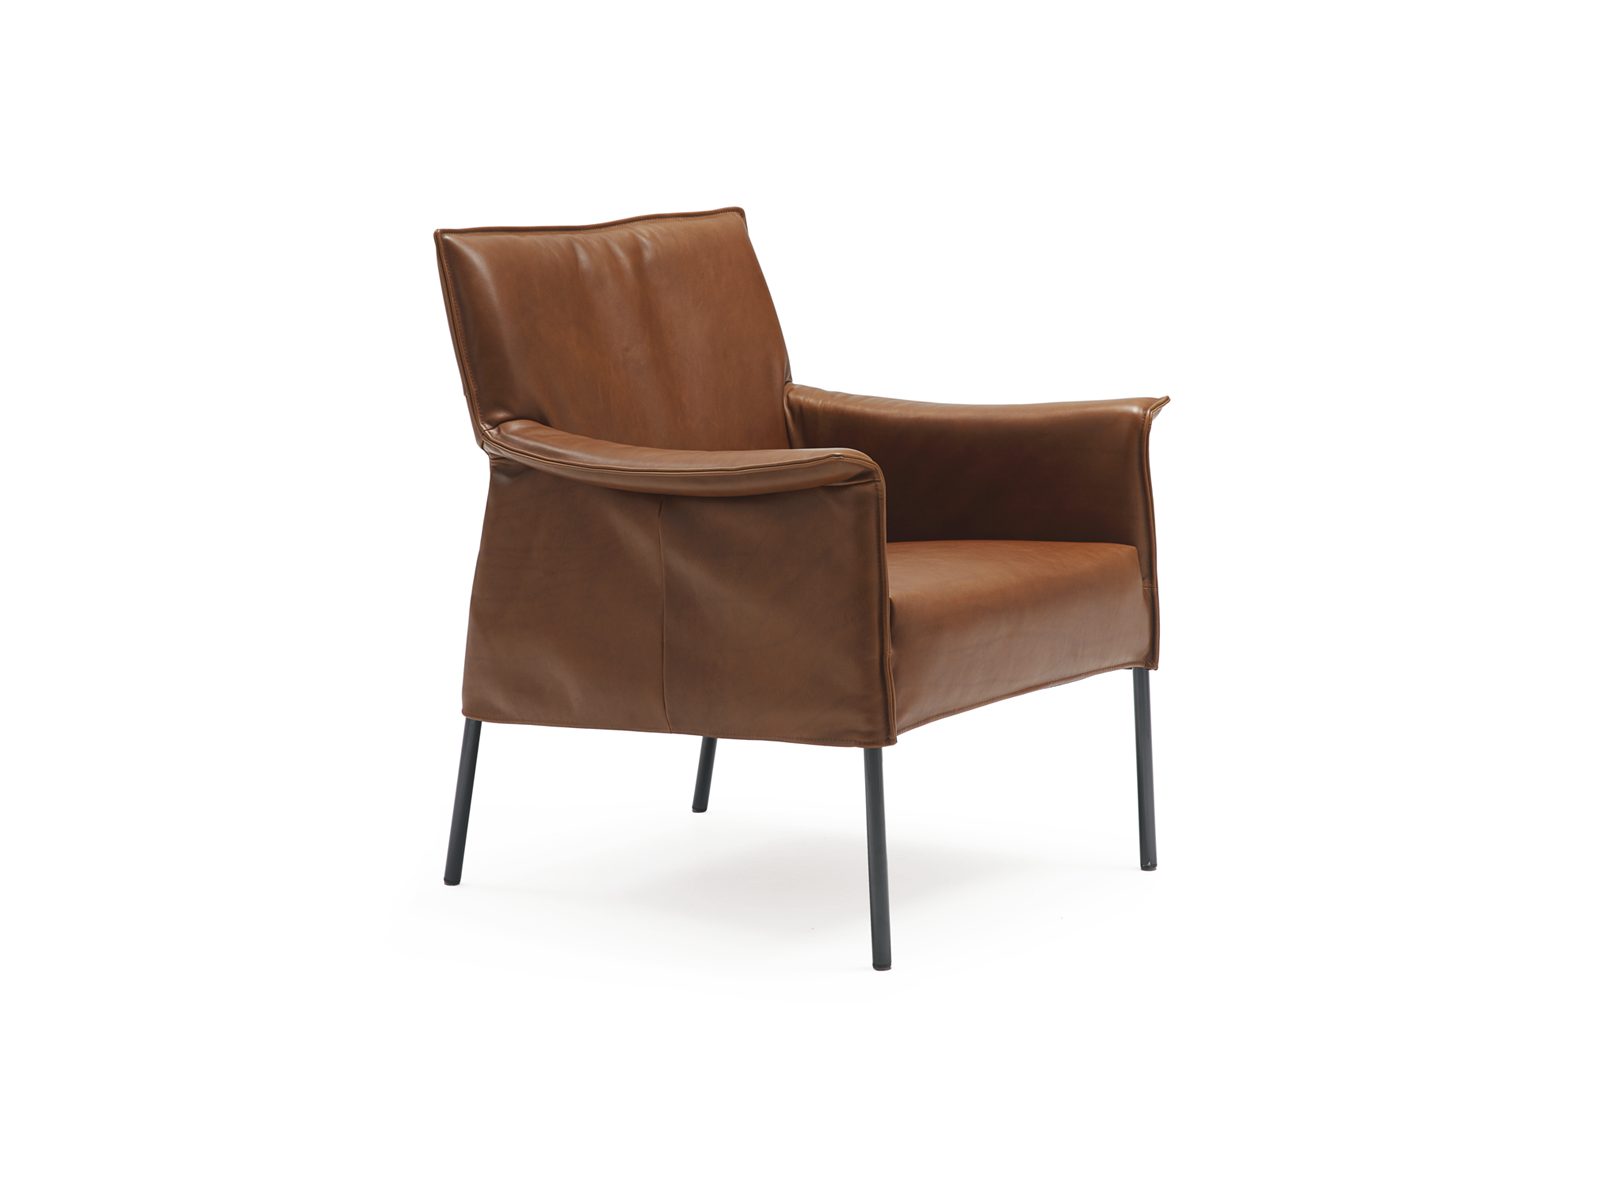 Productafbeelding van Design on Stock fauteuil Limec